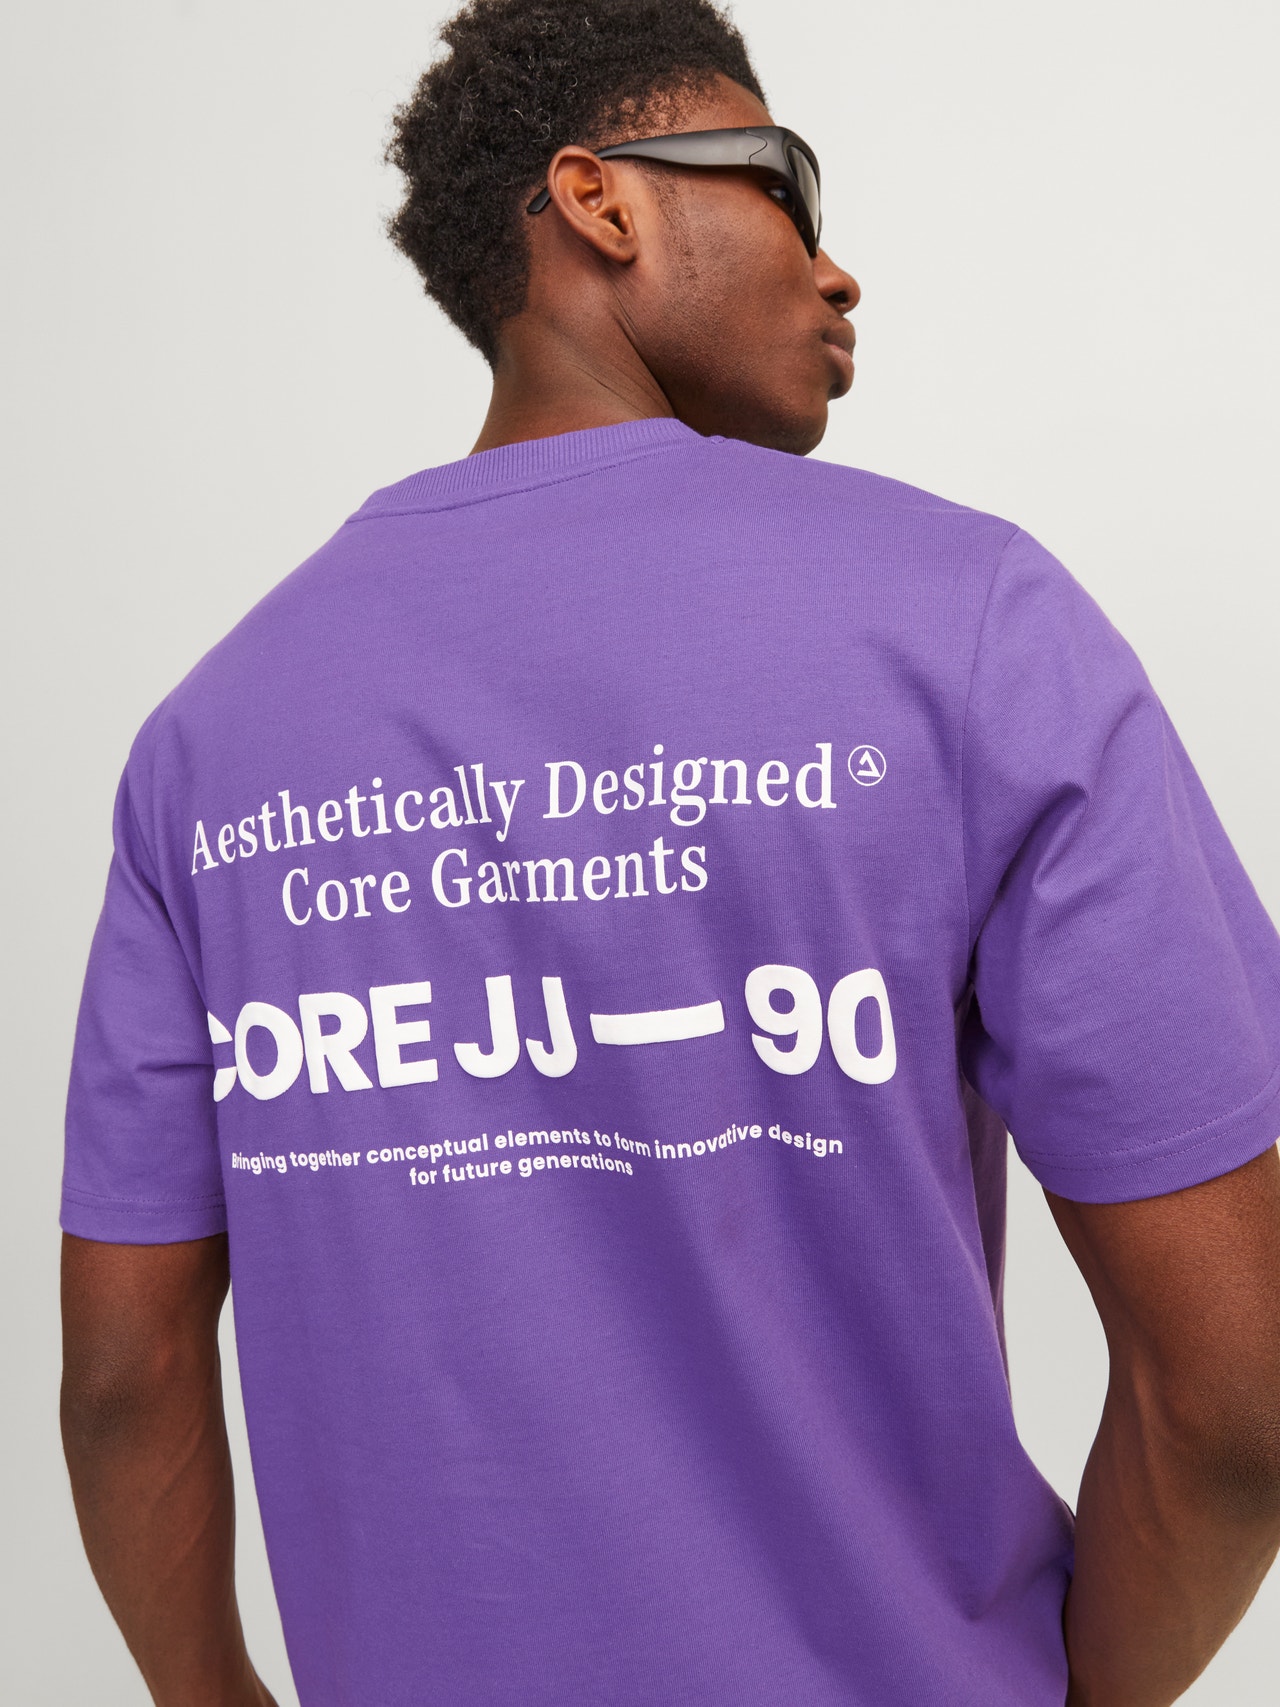 Jack & Jones Gedruckt Rundhals T-shirt -Deep Lavender - 12256407